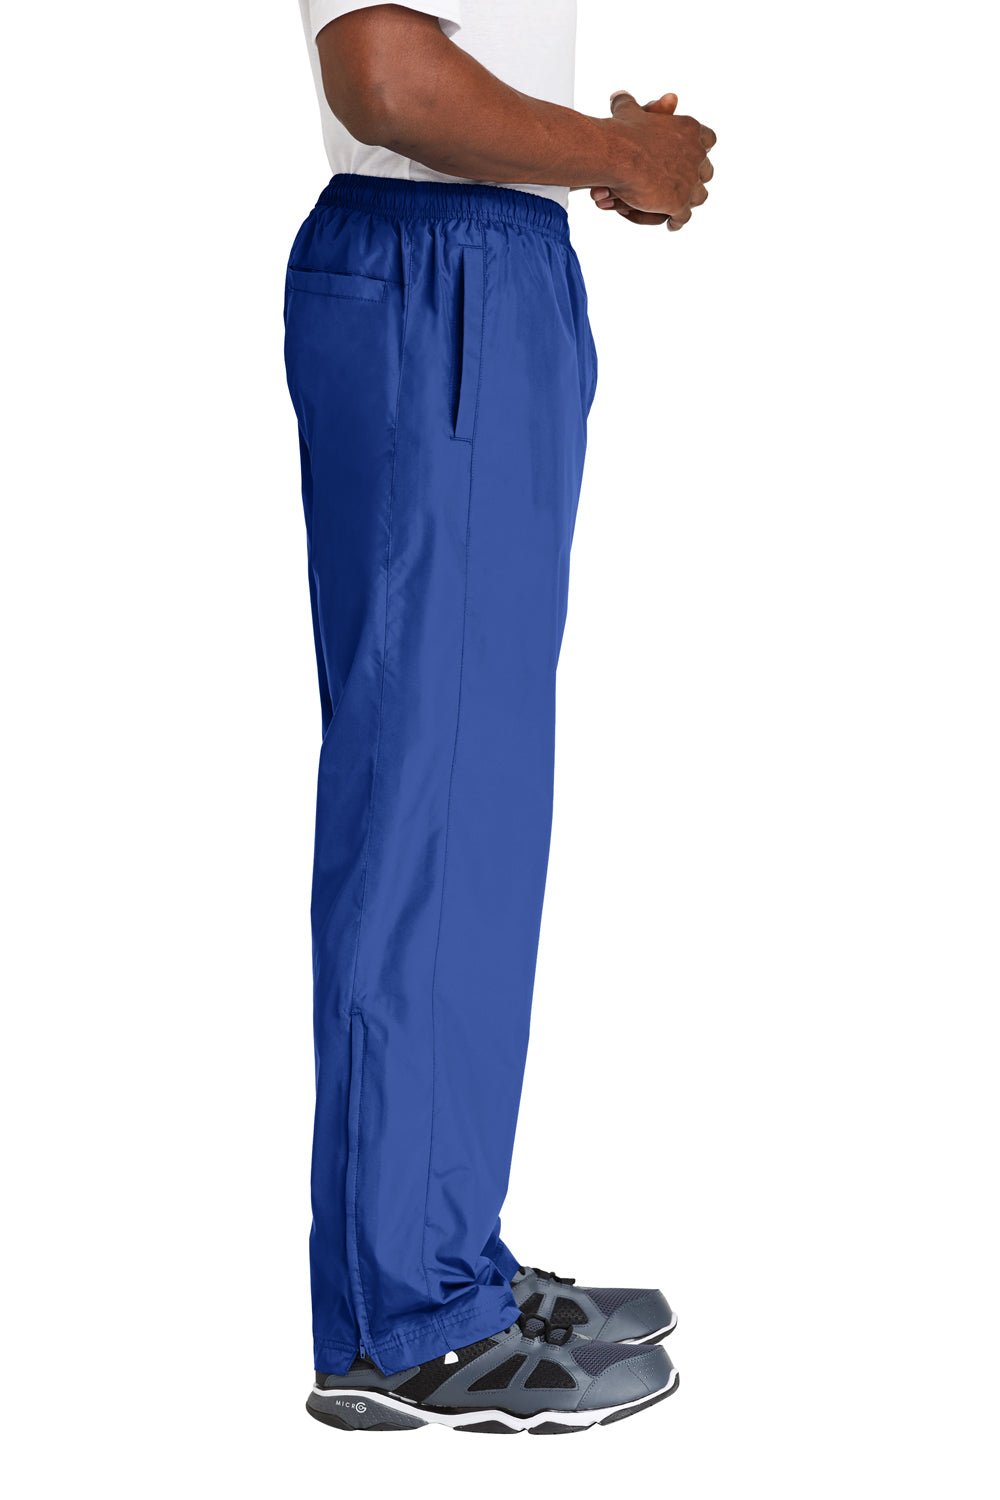 Sport-Tek PST74 Wind Pants w/ Pockets True Royal Blue Side